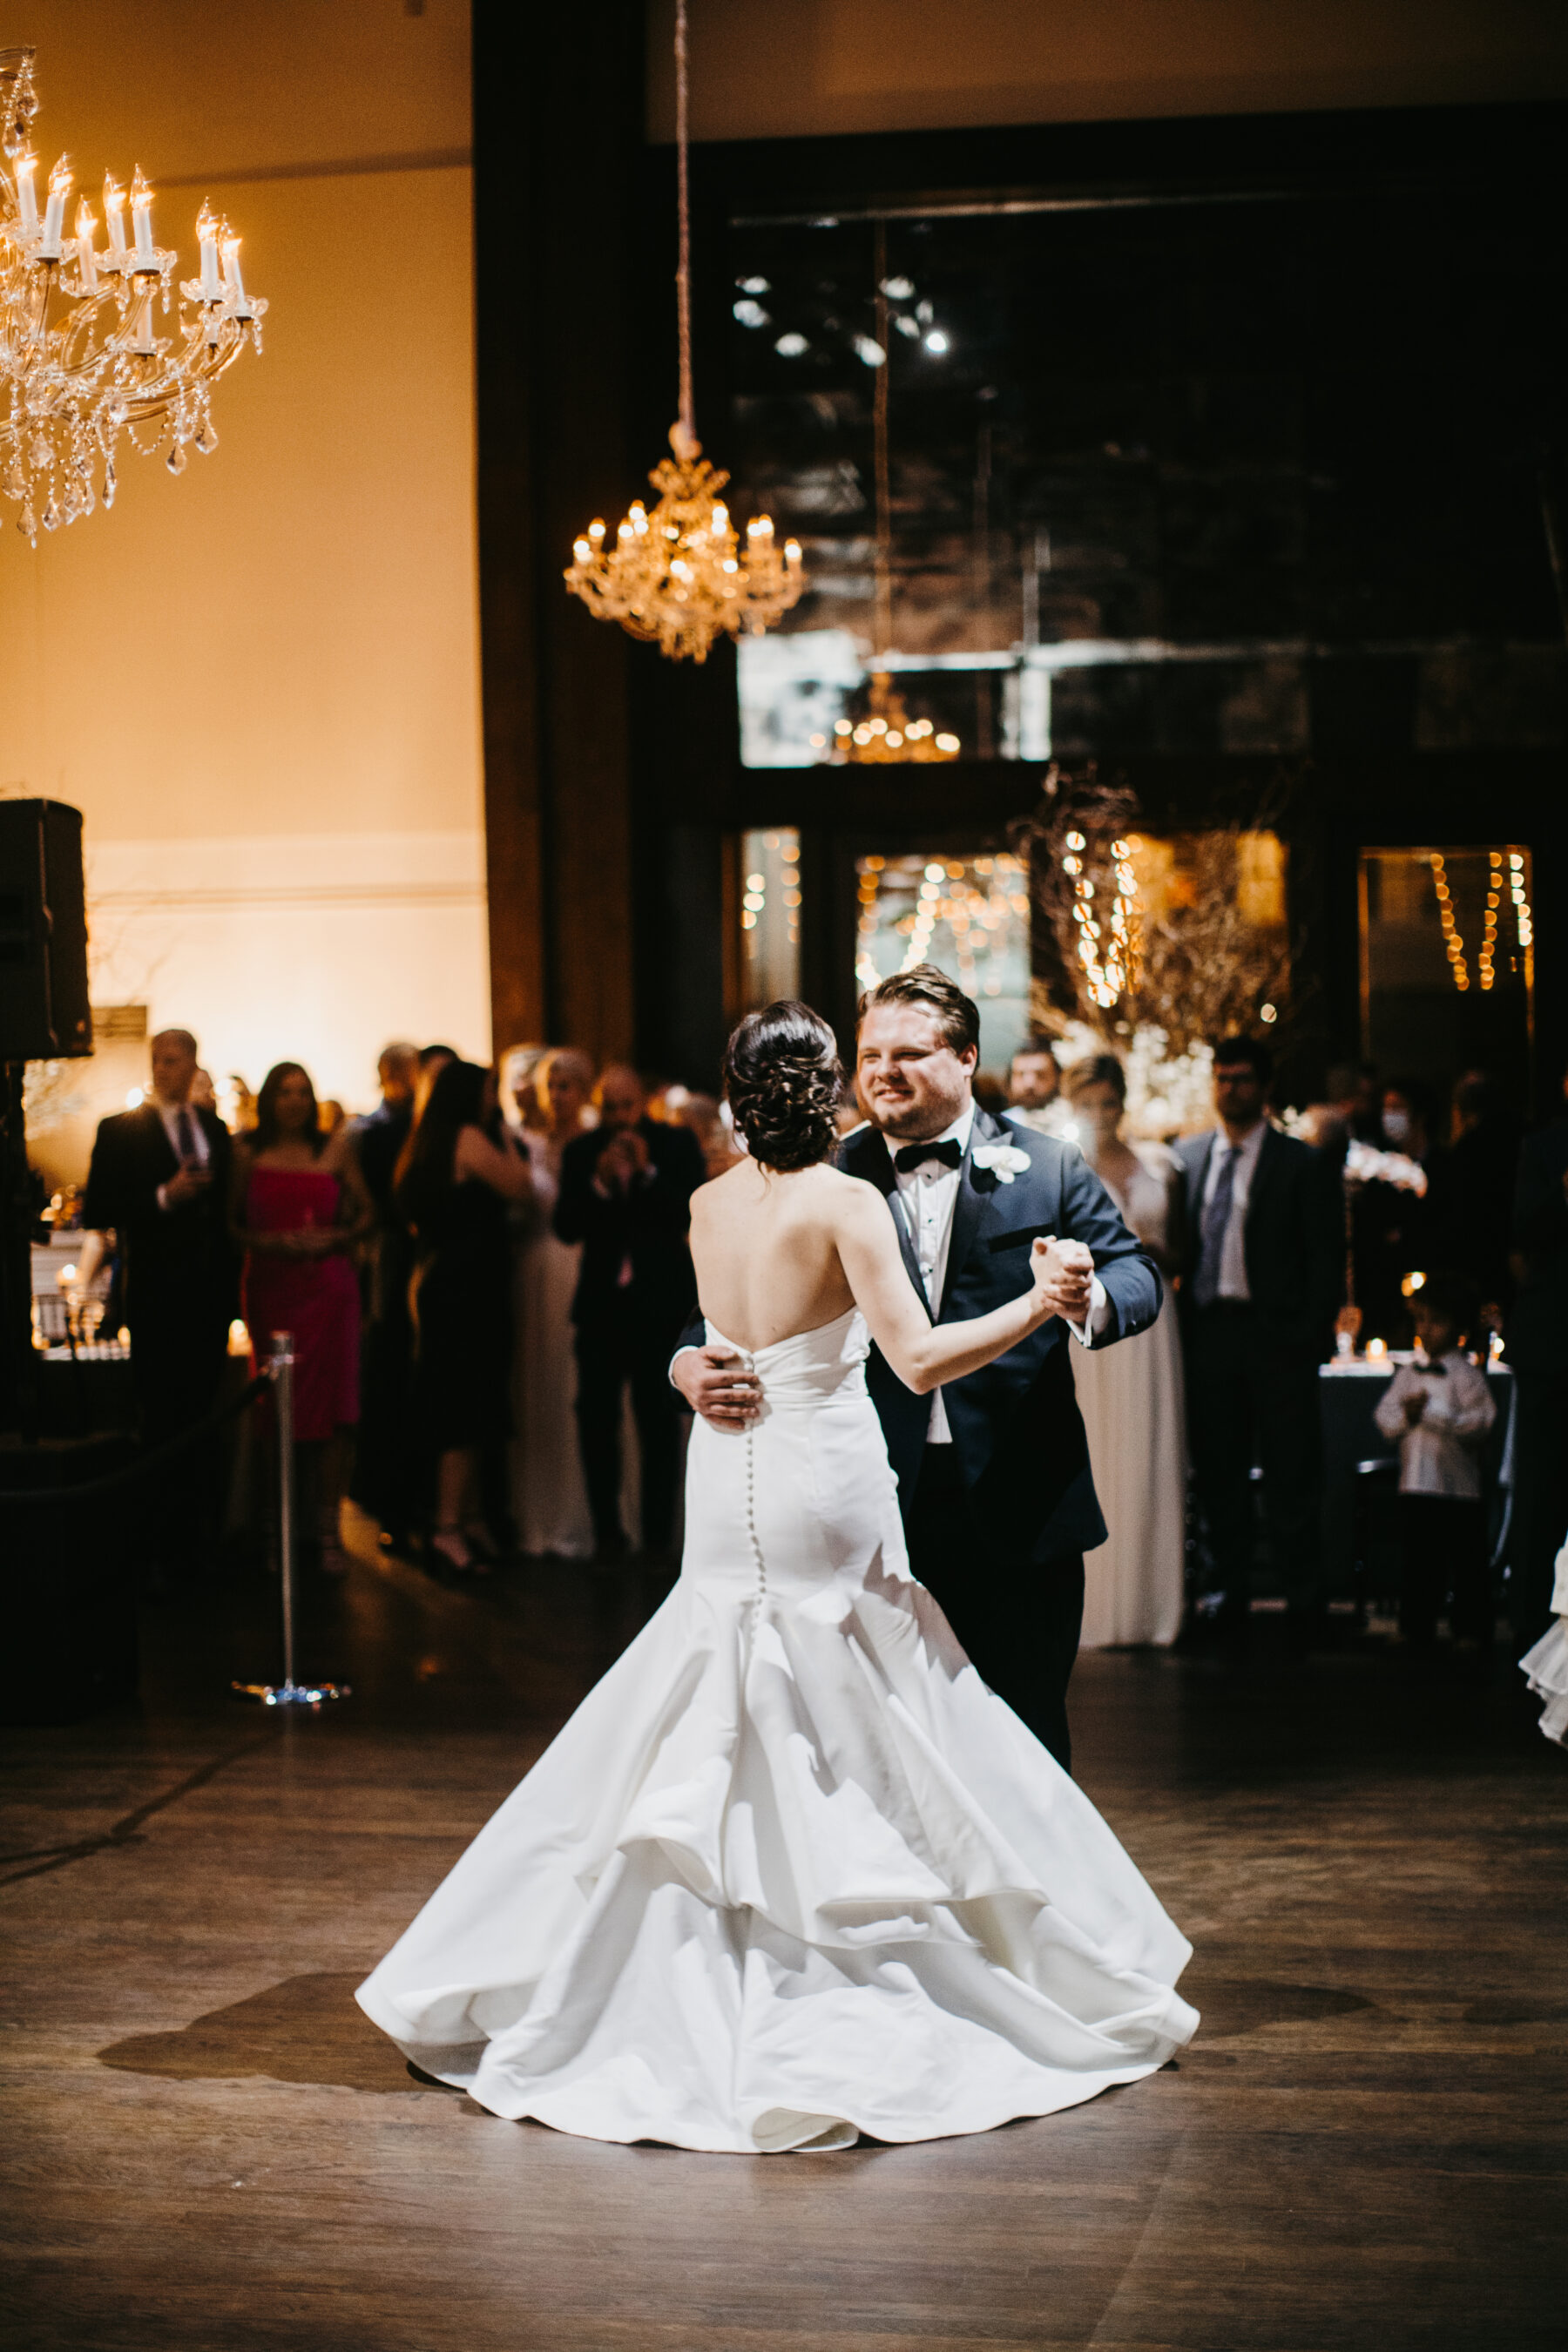 Wedding first dance | Nashville Bride Guide